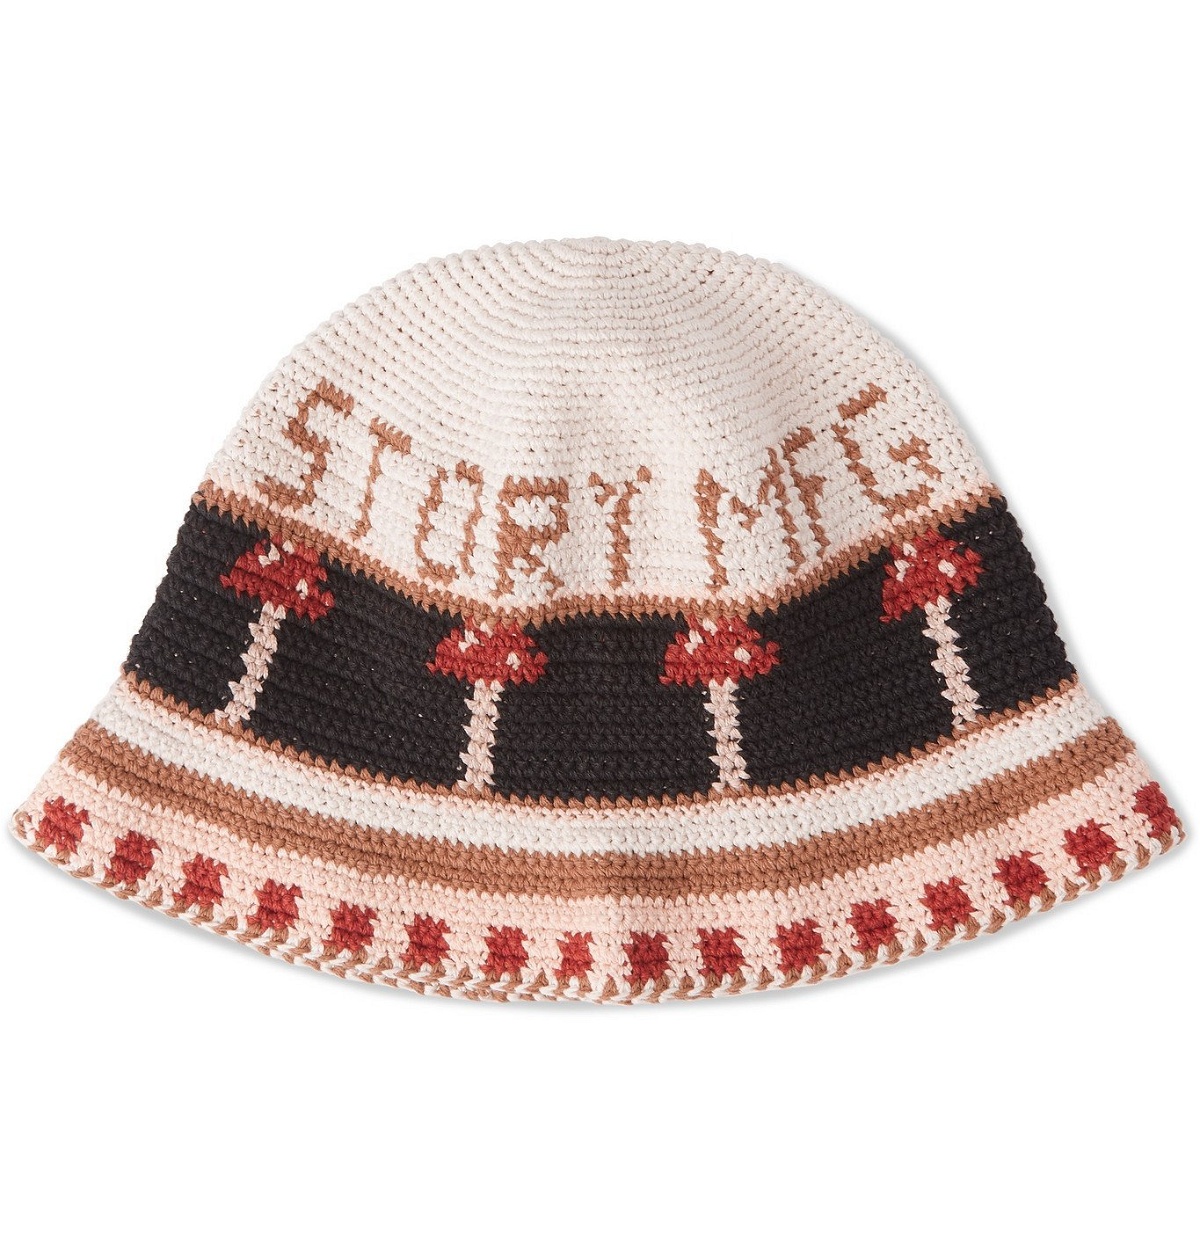 Story Mfg. - Brew Crocheted Organic Cotton Bucket Hat - Multi